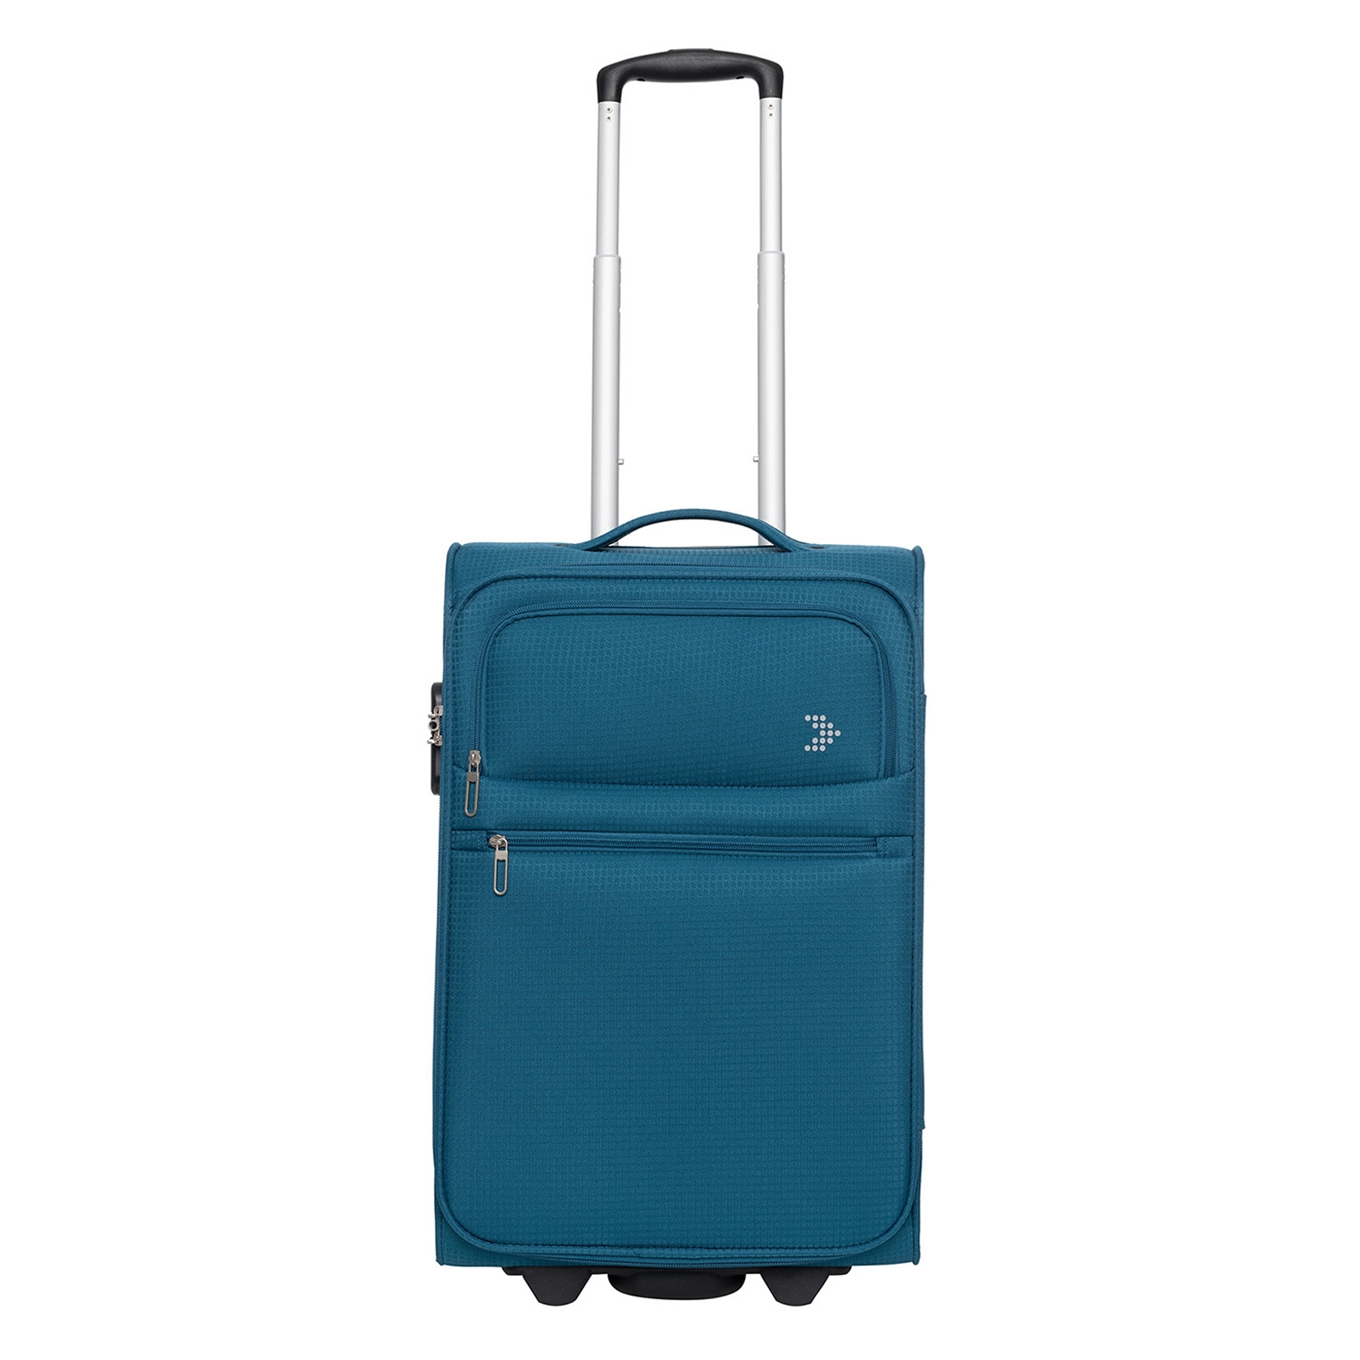 Handbagage Koffer Kopen? Al Vanaf euro! Travelbags.nl